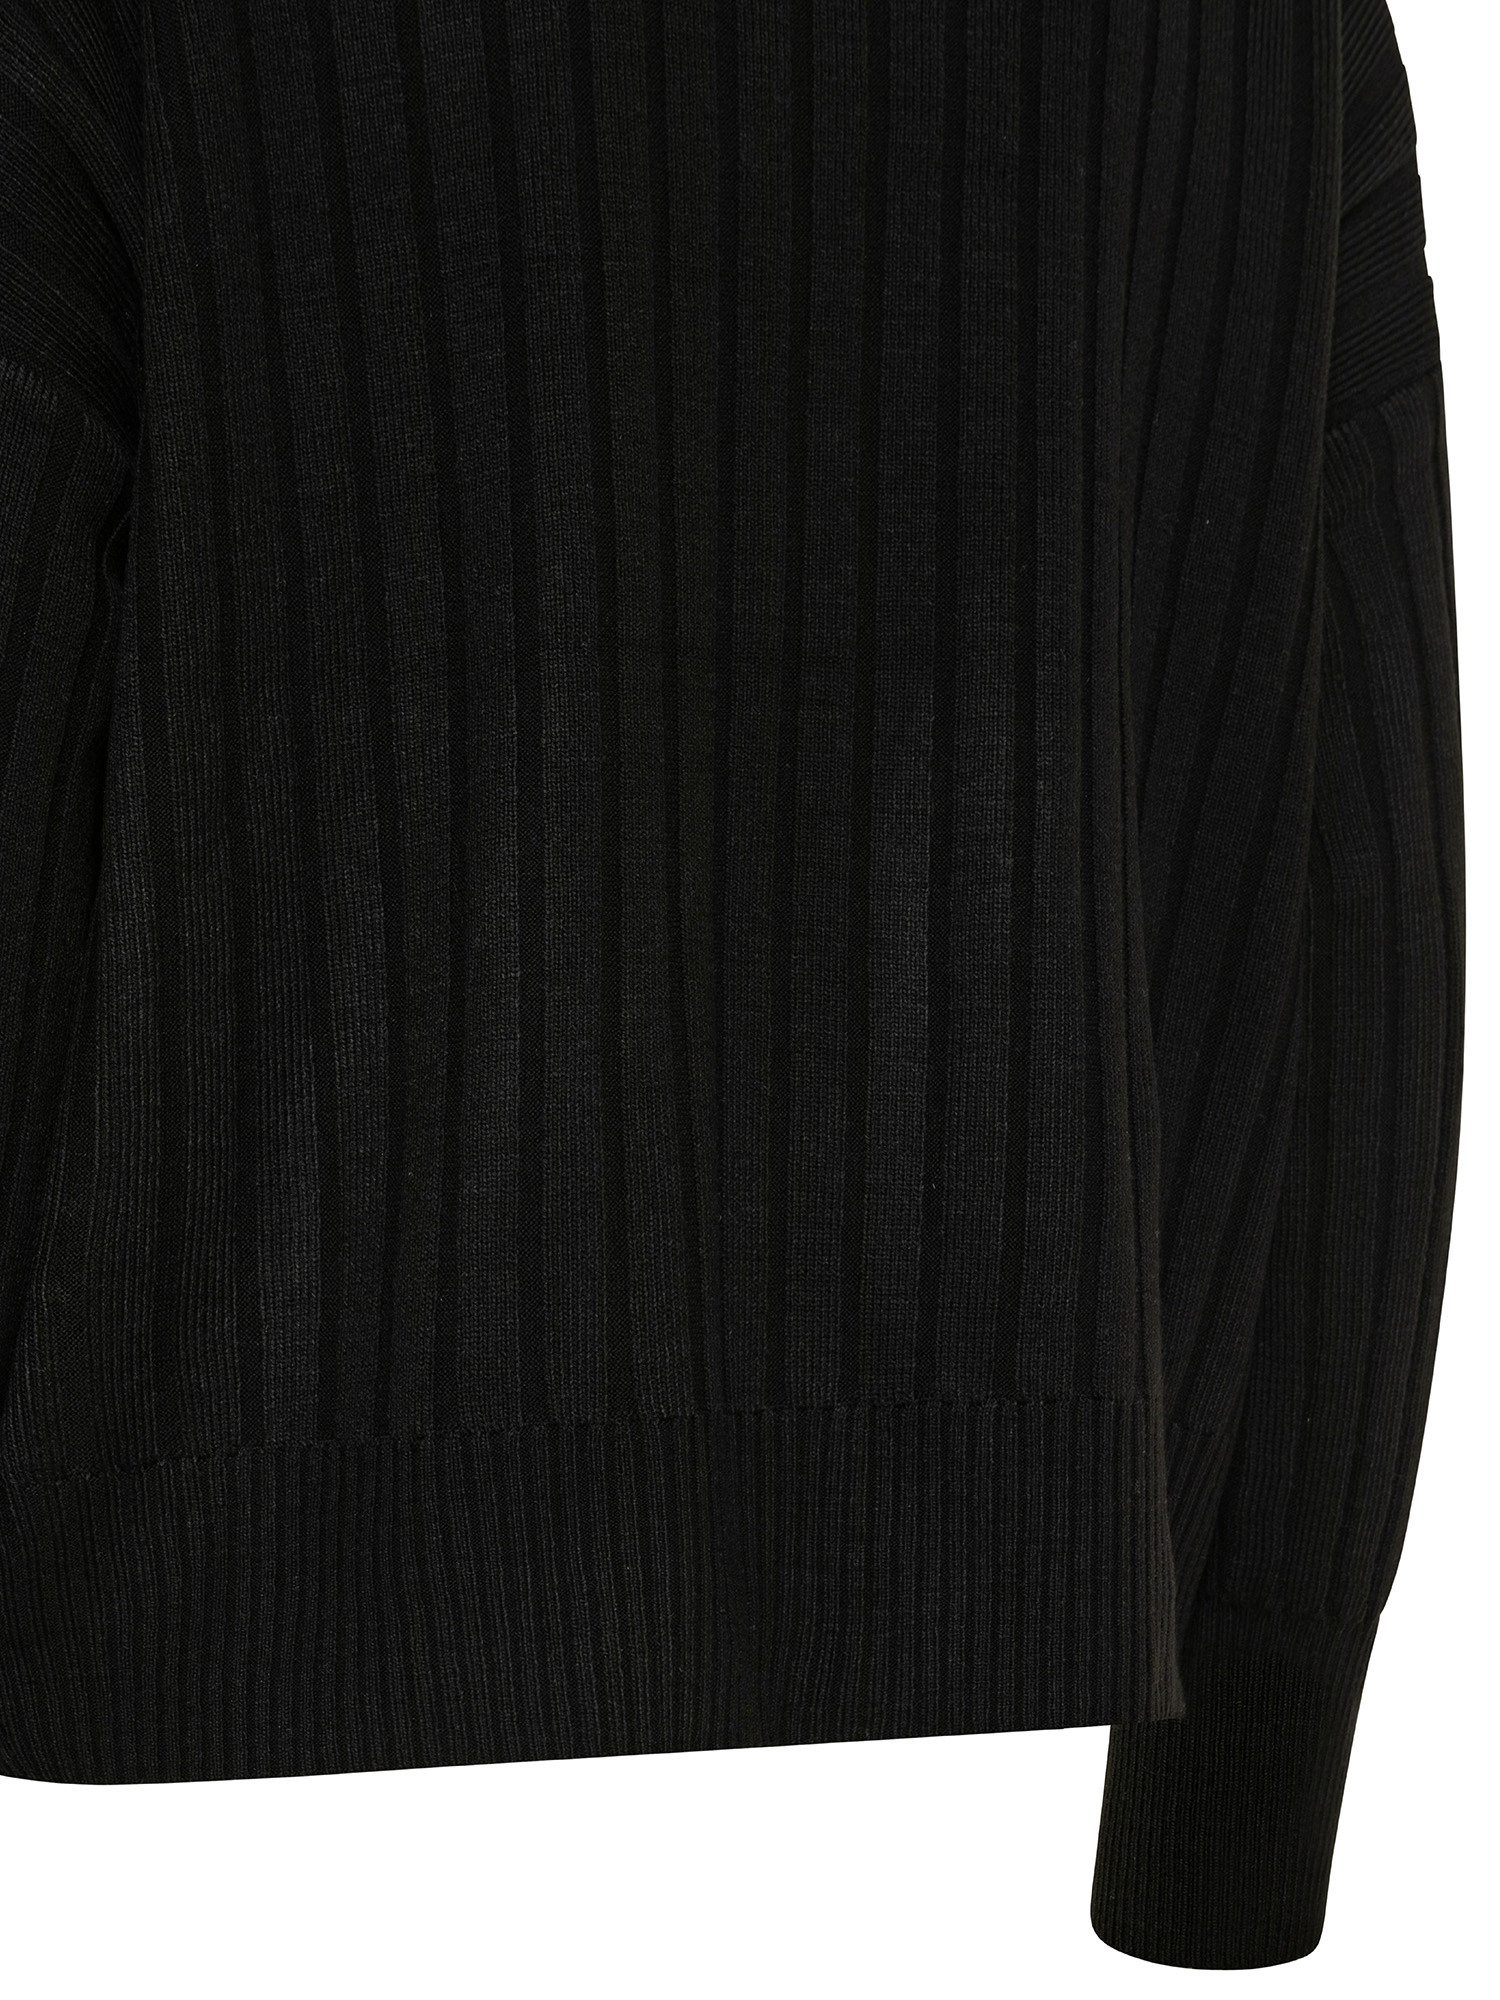 ribbed pullover, Black, large image number 2